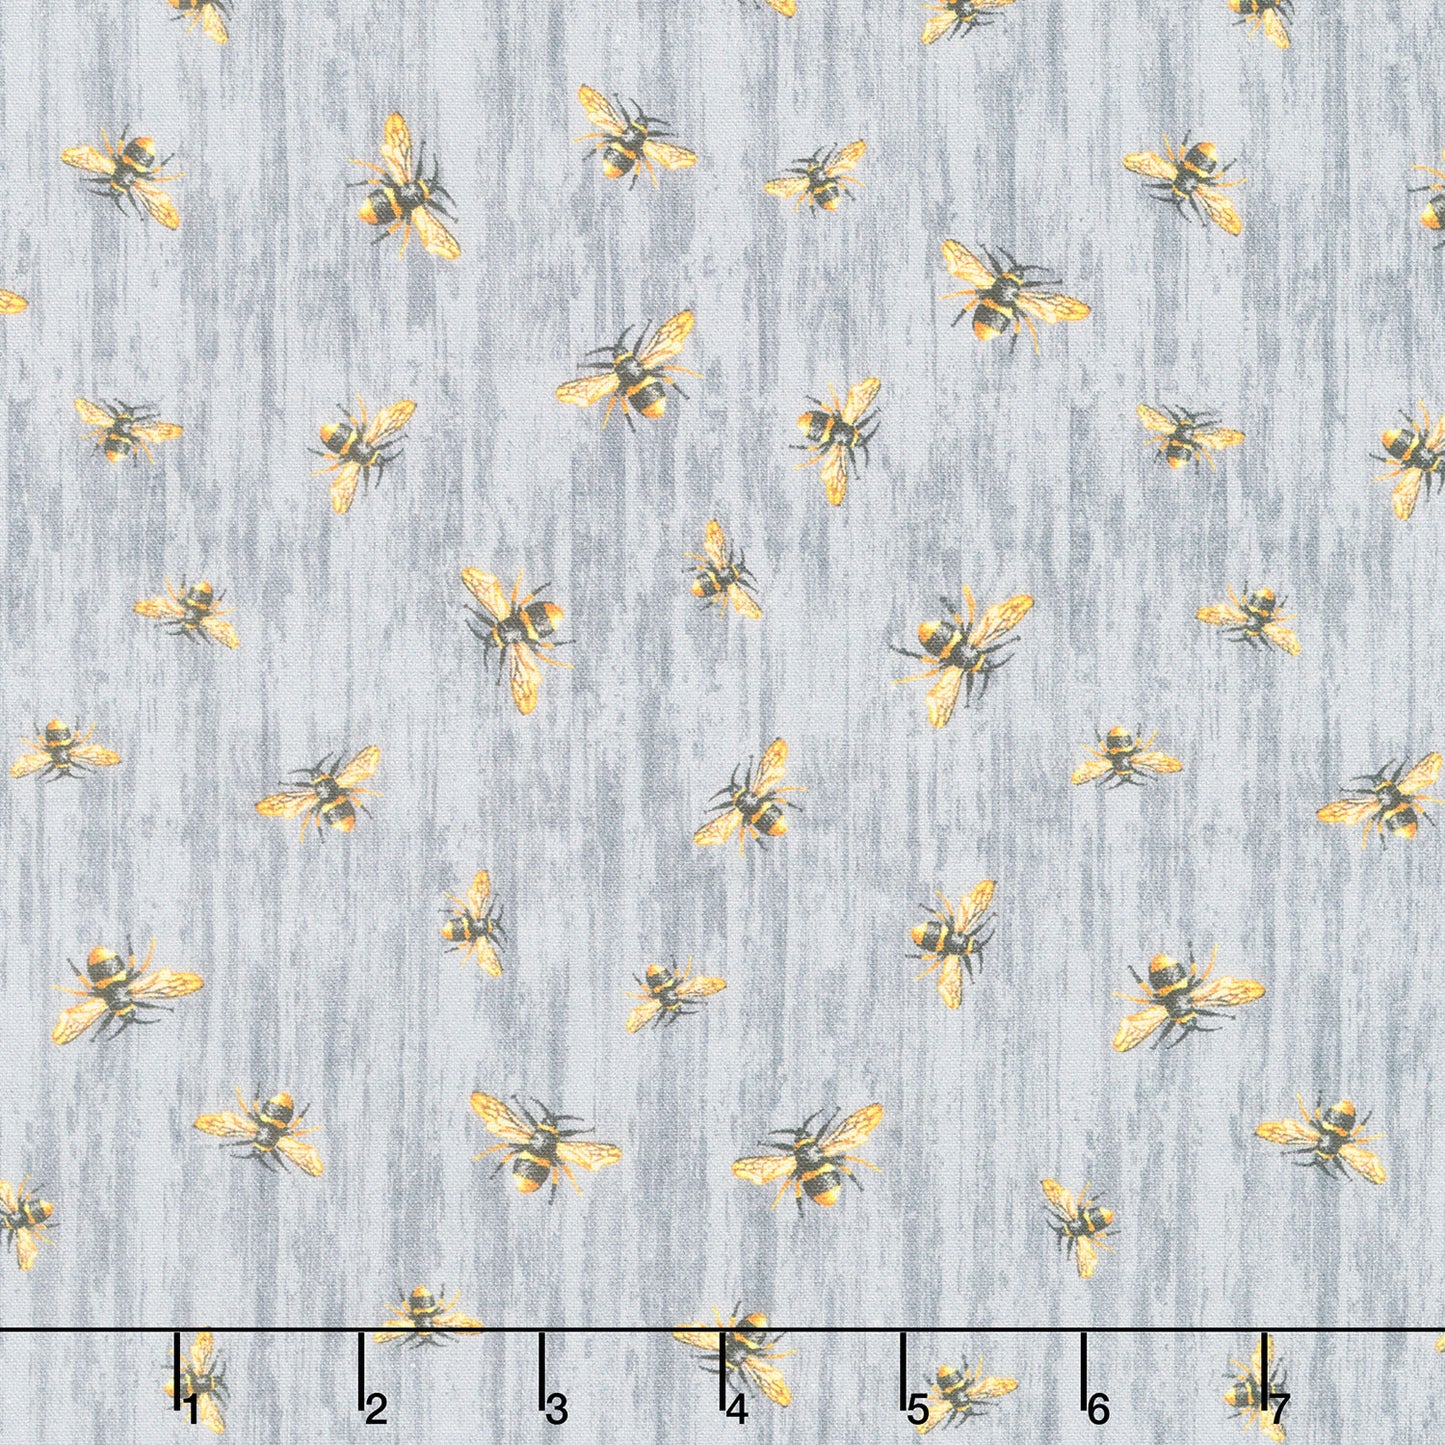 Honey Bee Farm - Flying Bees On Wood Texture Slate Yardage Primary Image